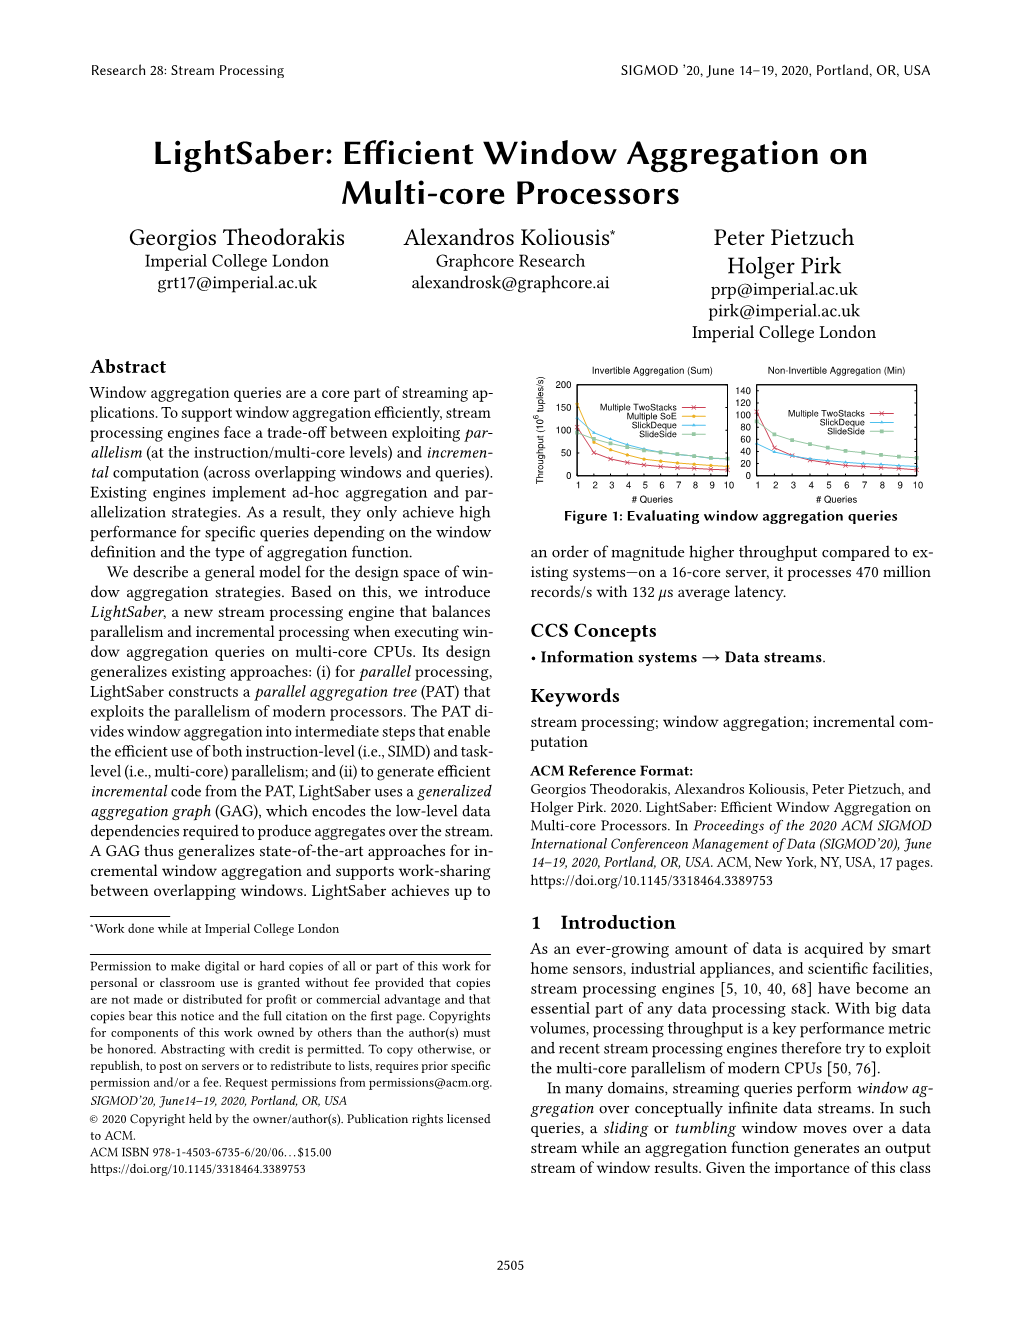 Lightsaber: Efficient Window Aggregation on Multi-Core Processors